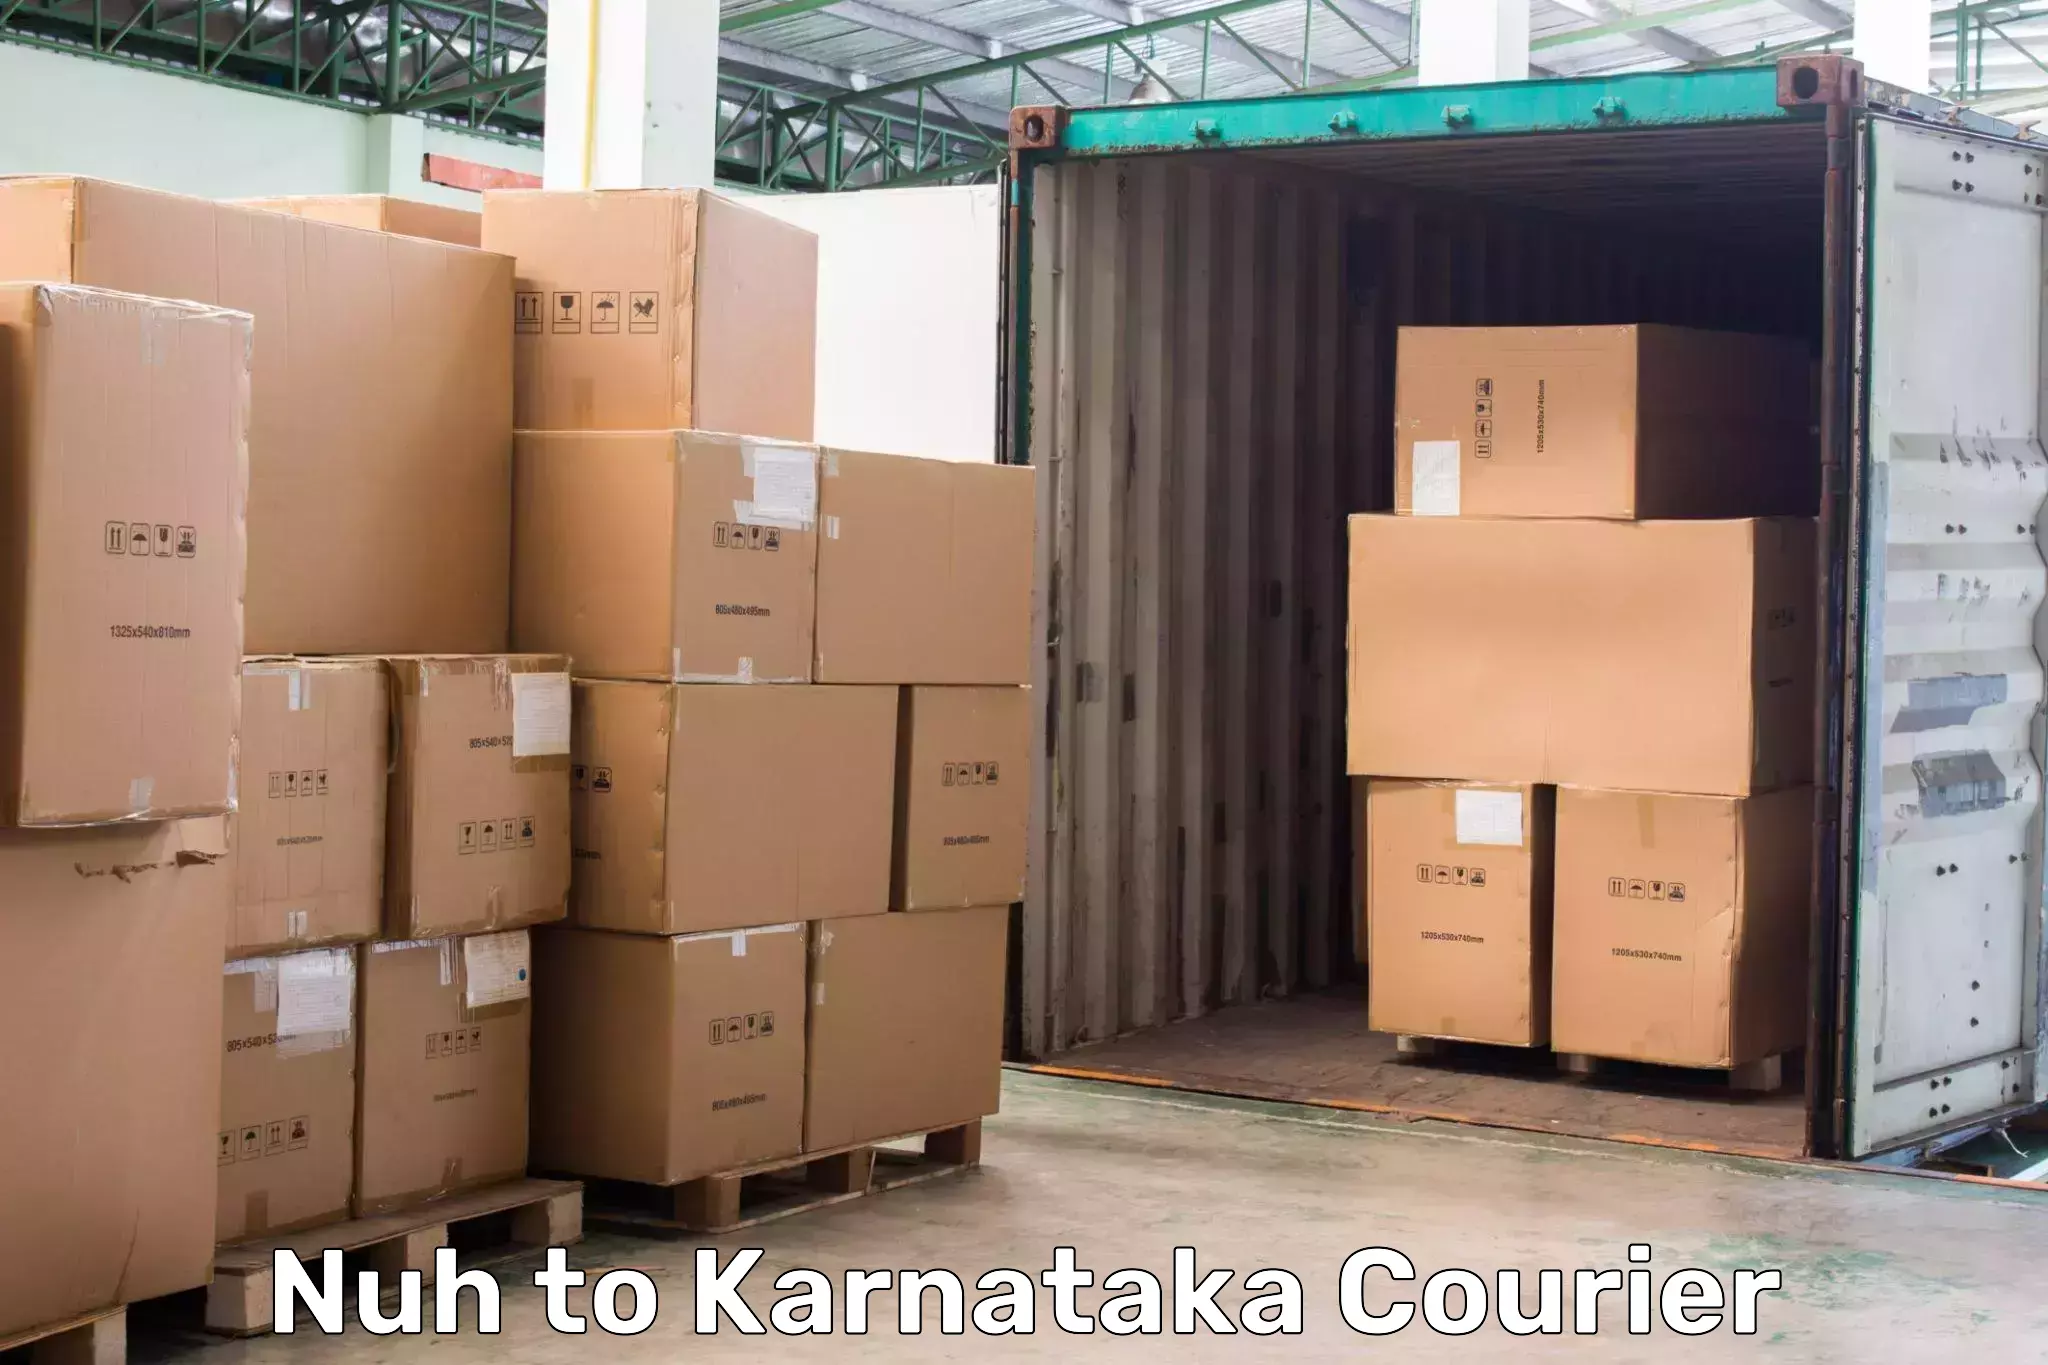 Global courier networks Nuh to Karnataka